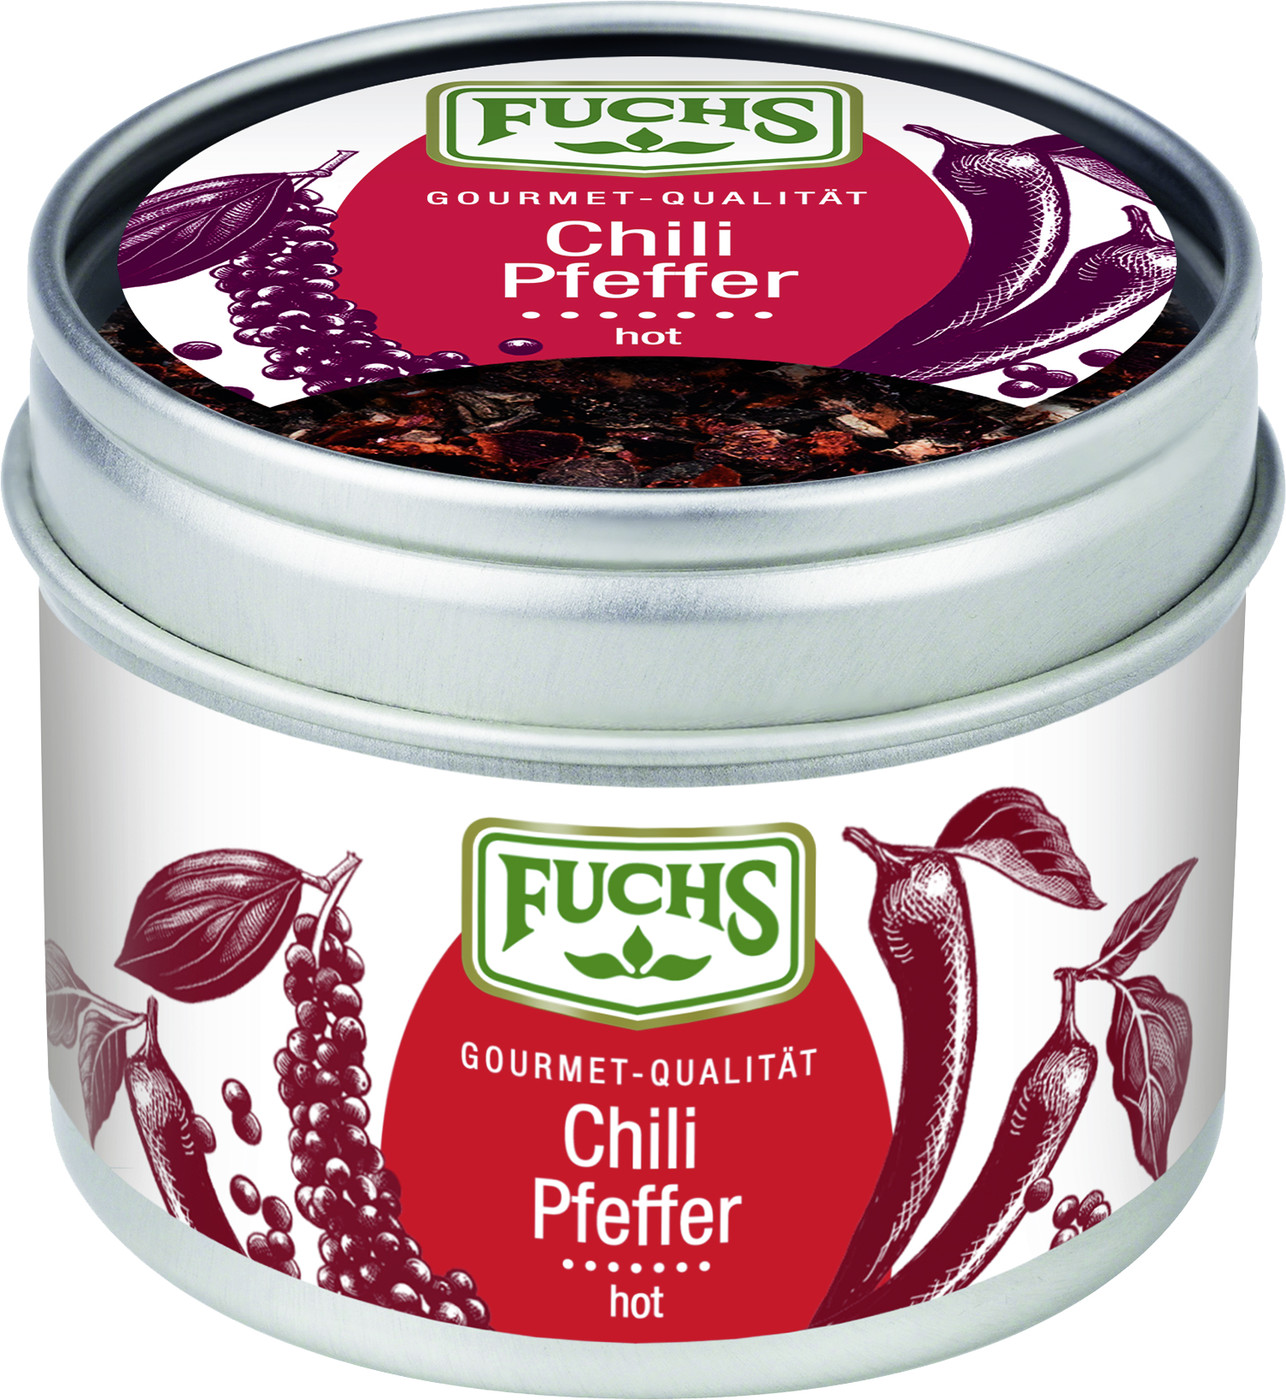 Fuchs Chilipfeffer hot 35G